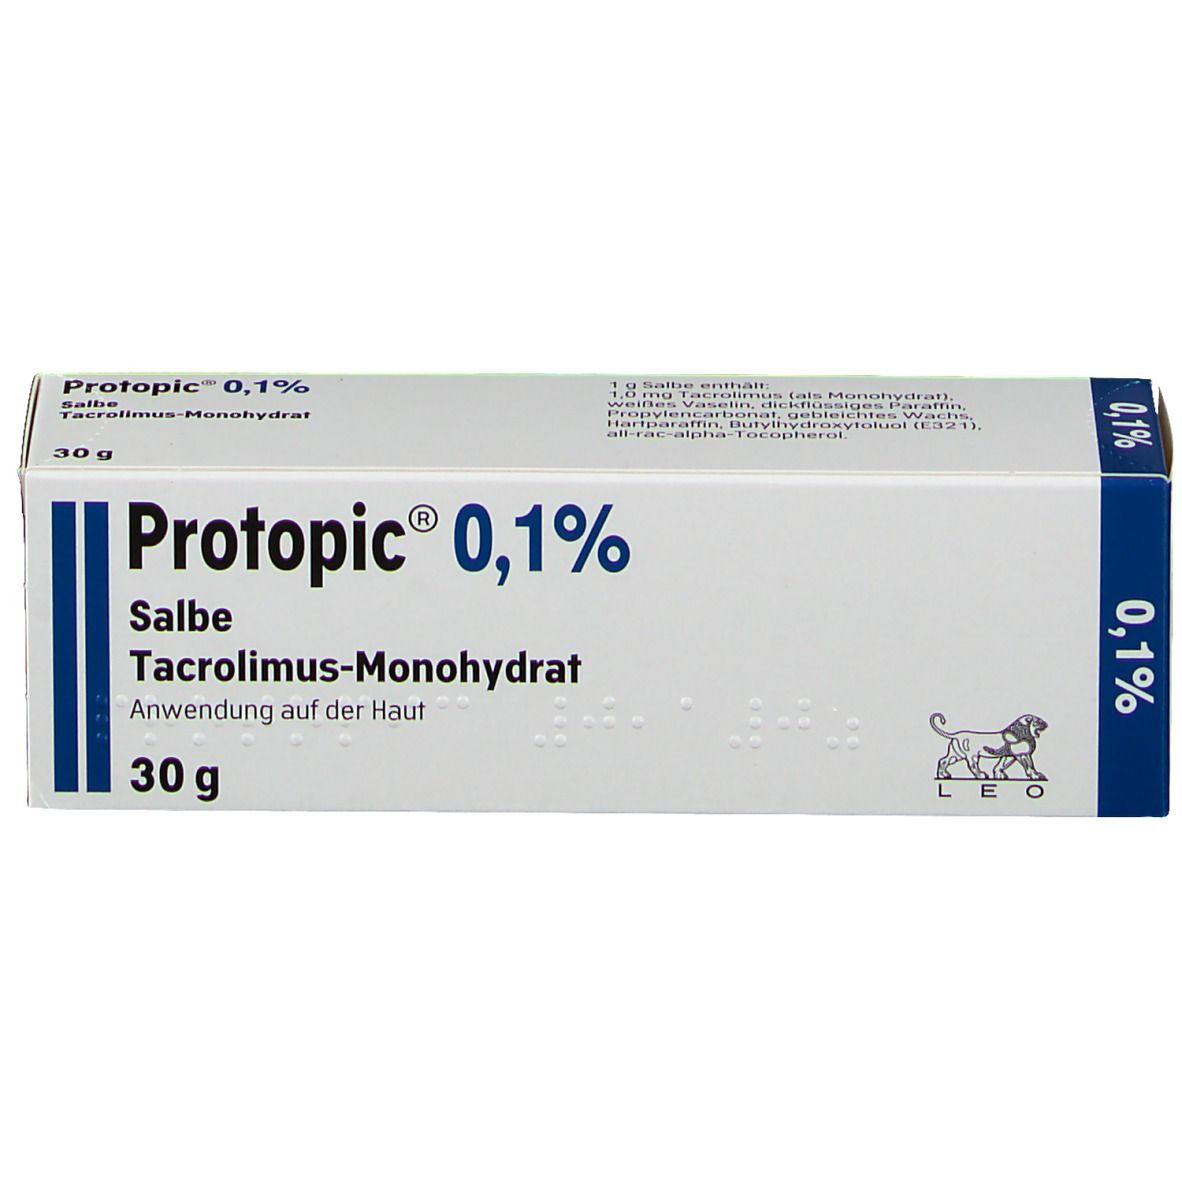 Protopic® 0,1% Salbe